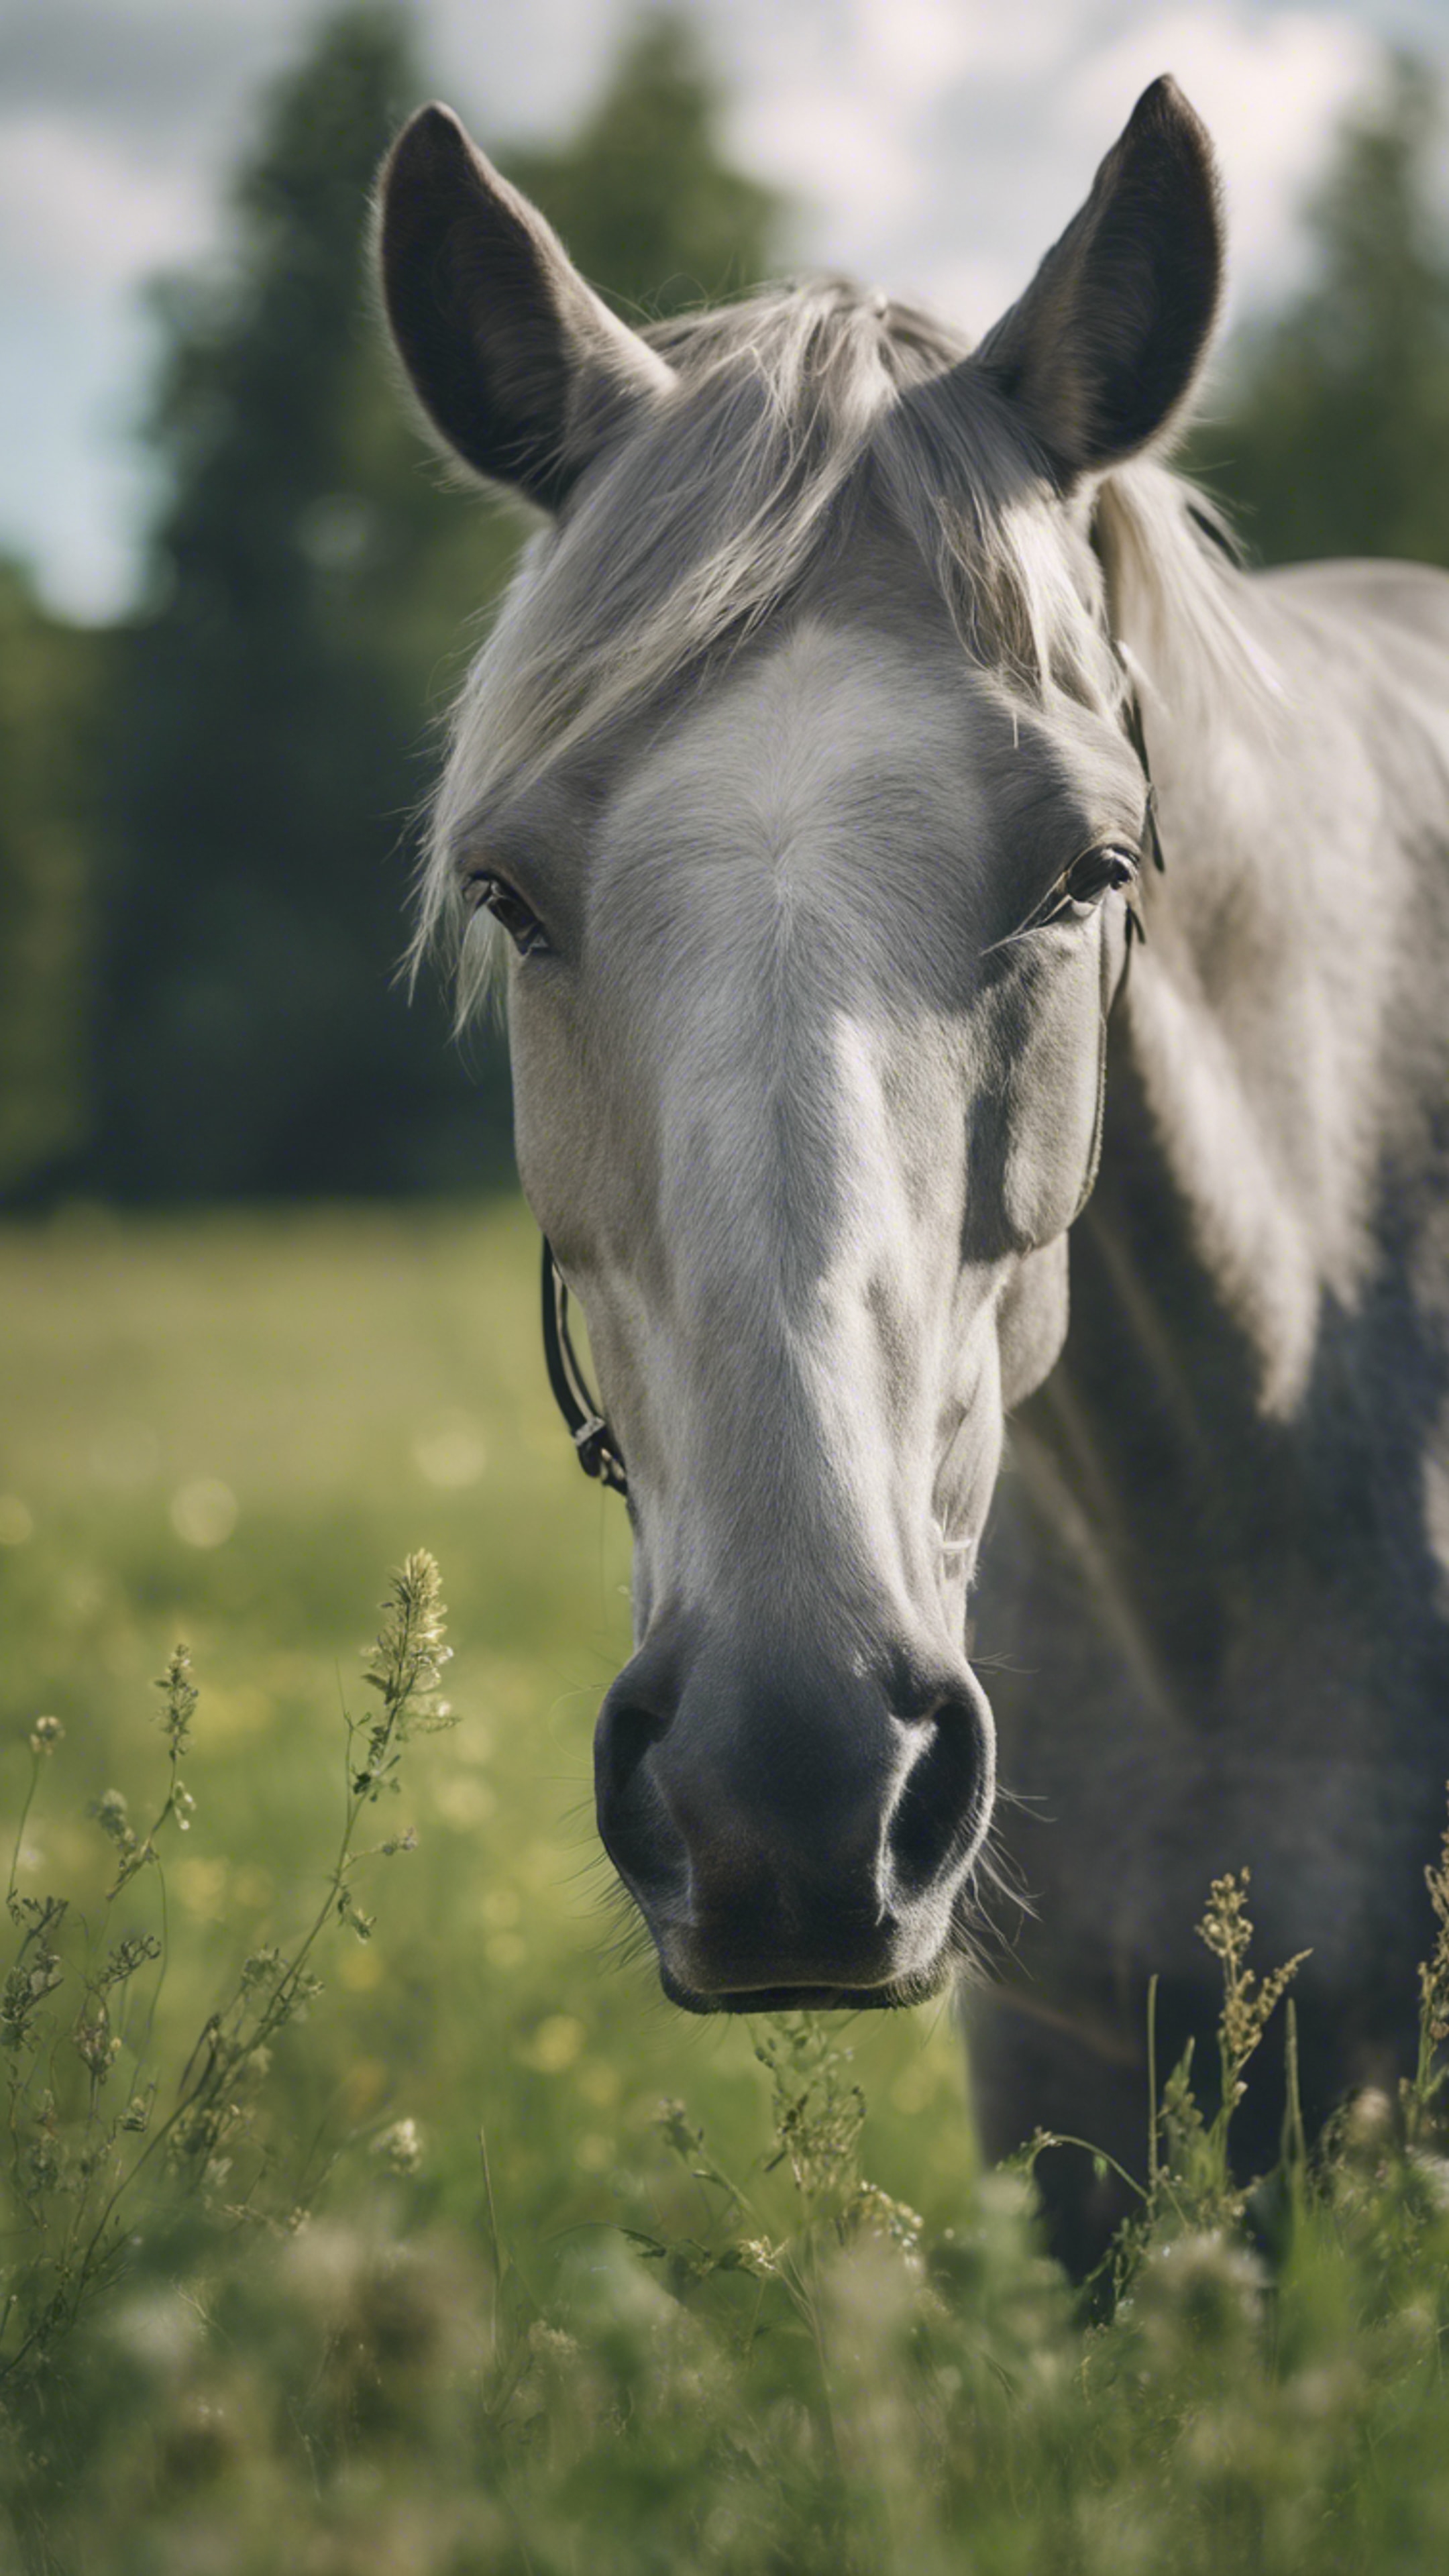 A calm grey quarter horse grazing freely in a green meadow under a cloudy sky.壁紙[ae89d2cd692c4a6c9aea]